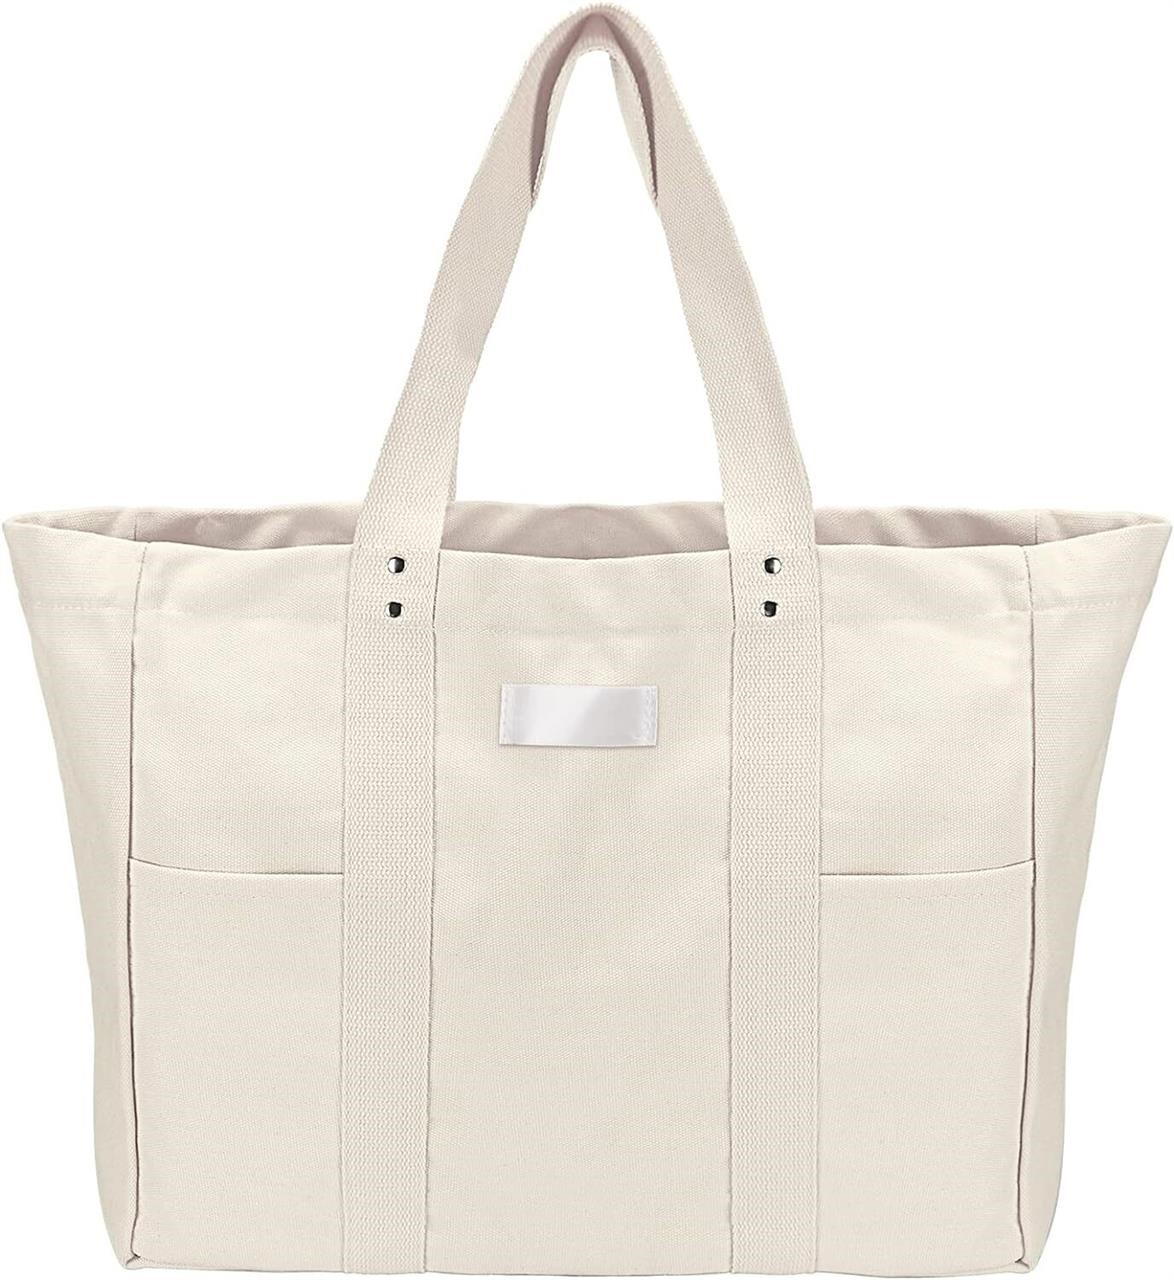 $13  TORASO Large Tote Bag  16*14*5  White